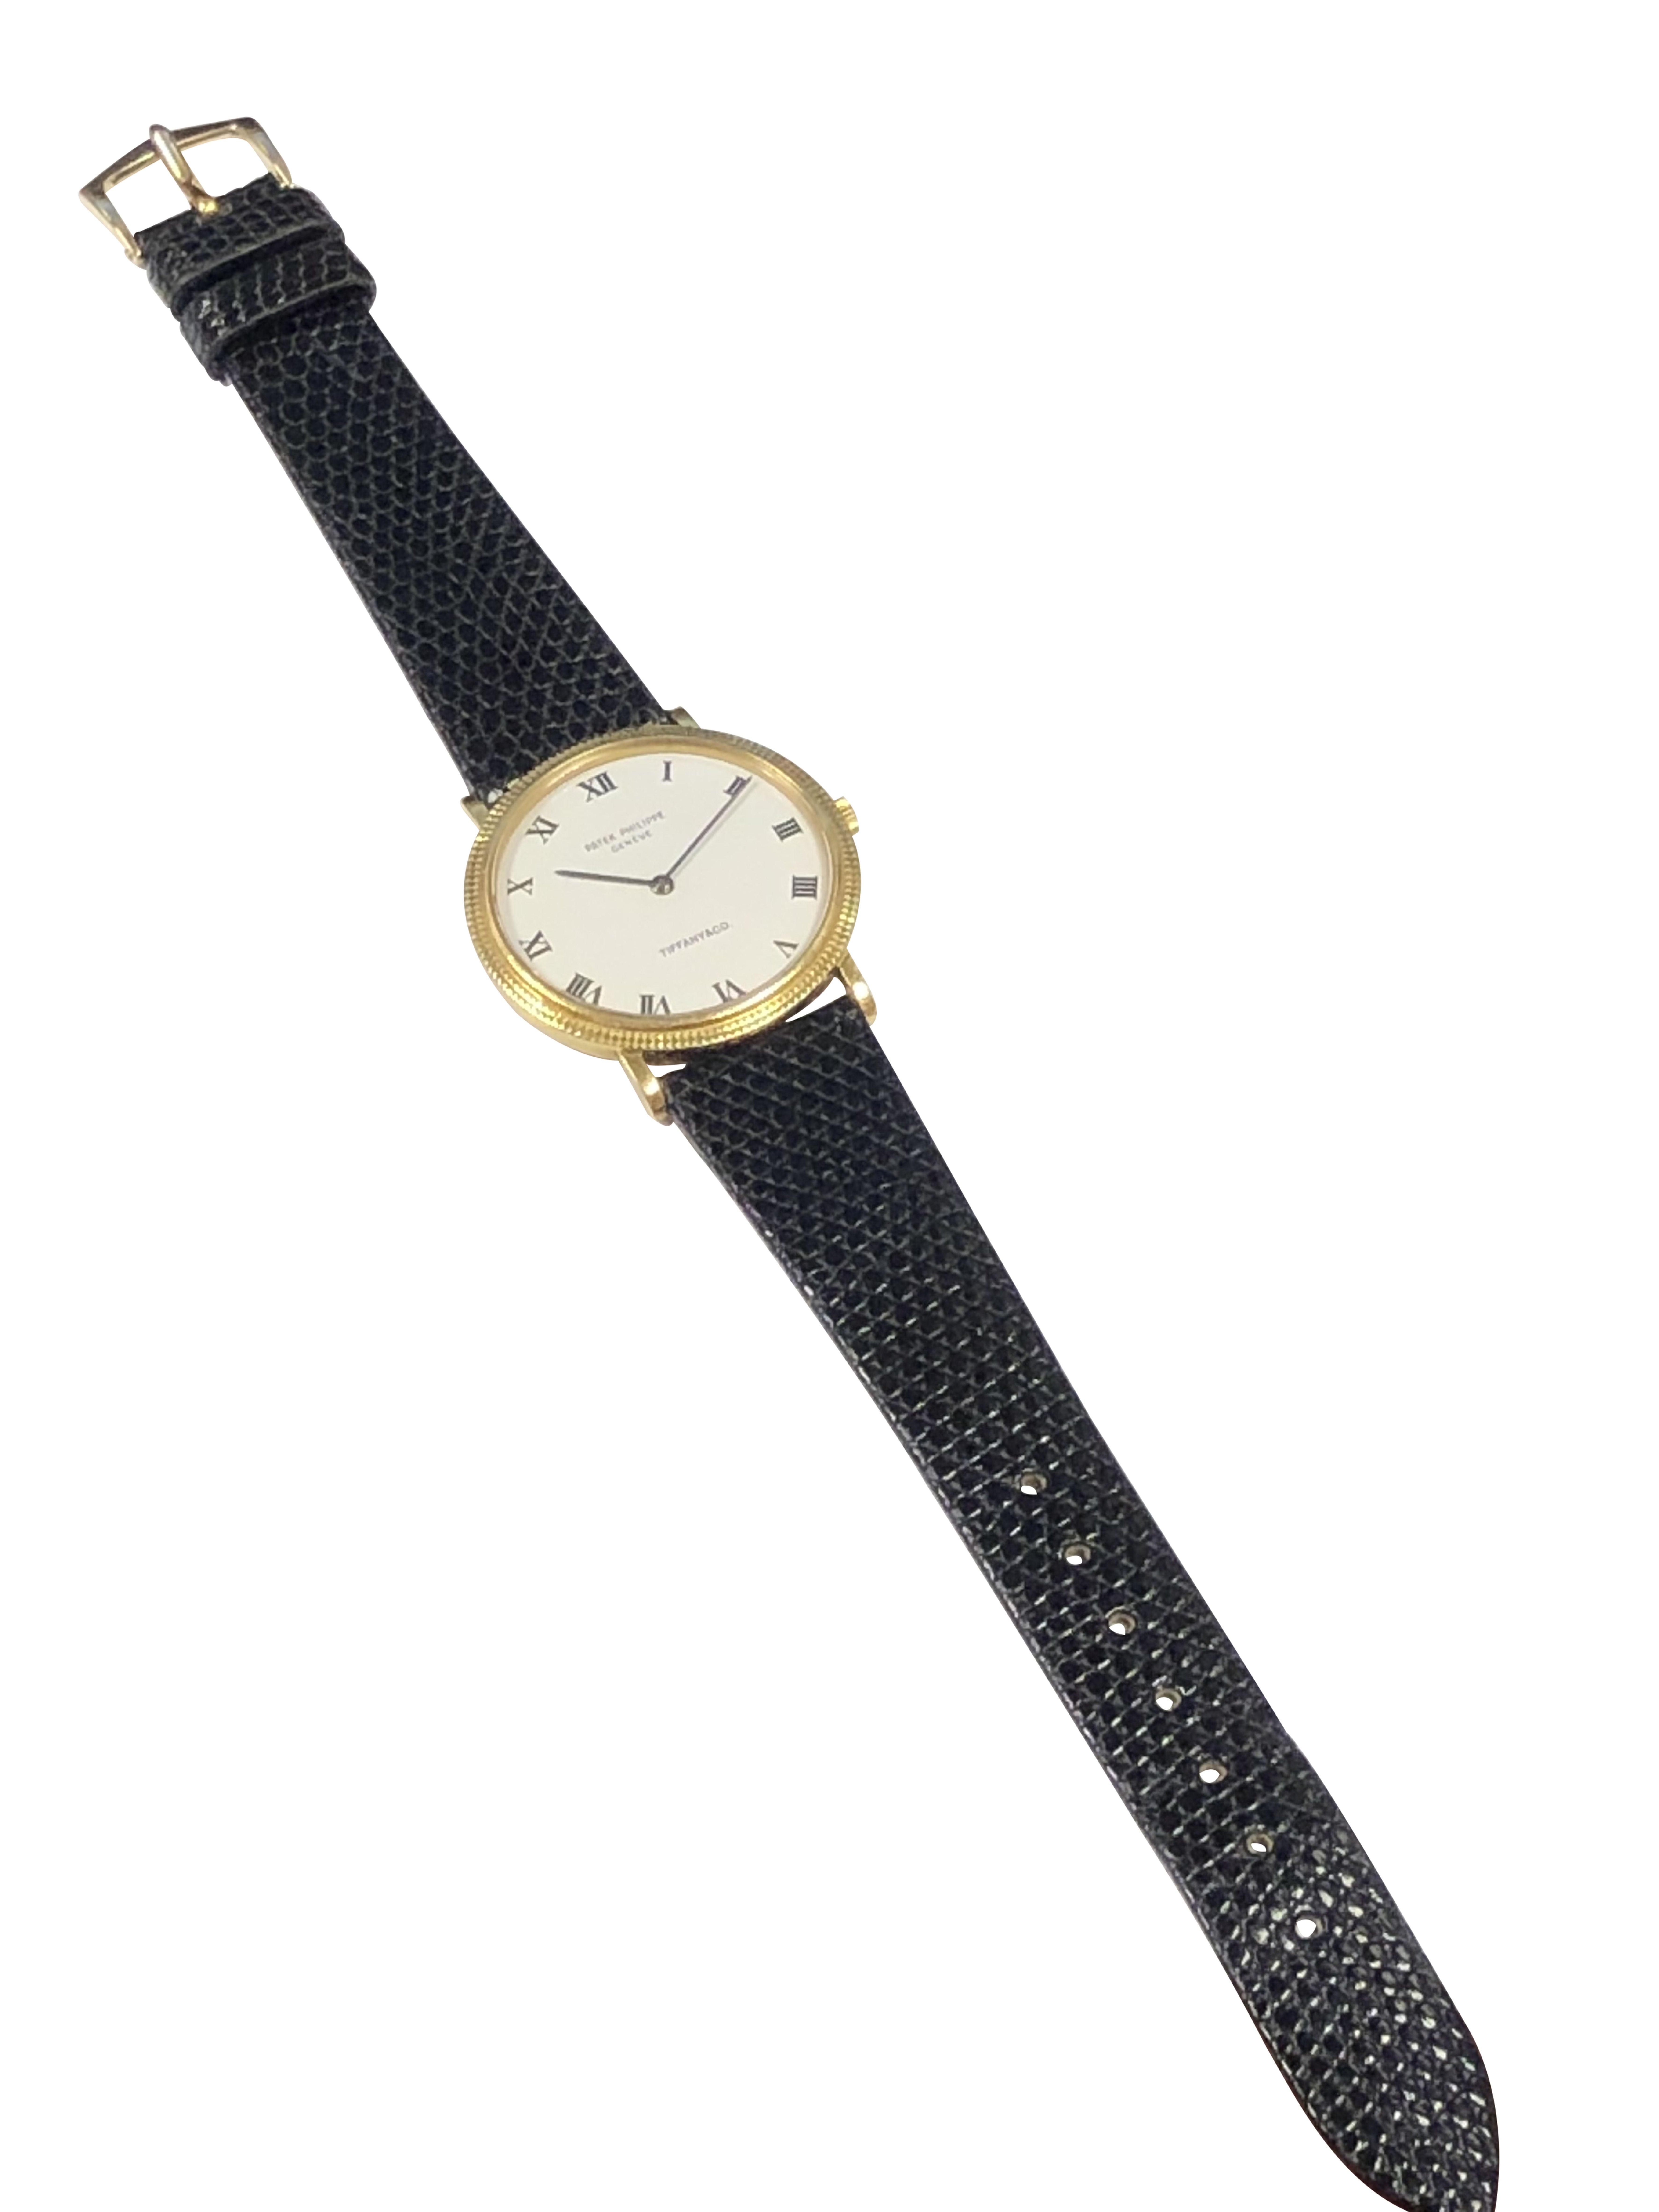 Men's Patek Philippe 3954 Calatrava Yellow Gold Tiffany & Co. Classic Wrist Watch